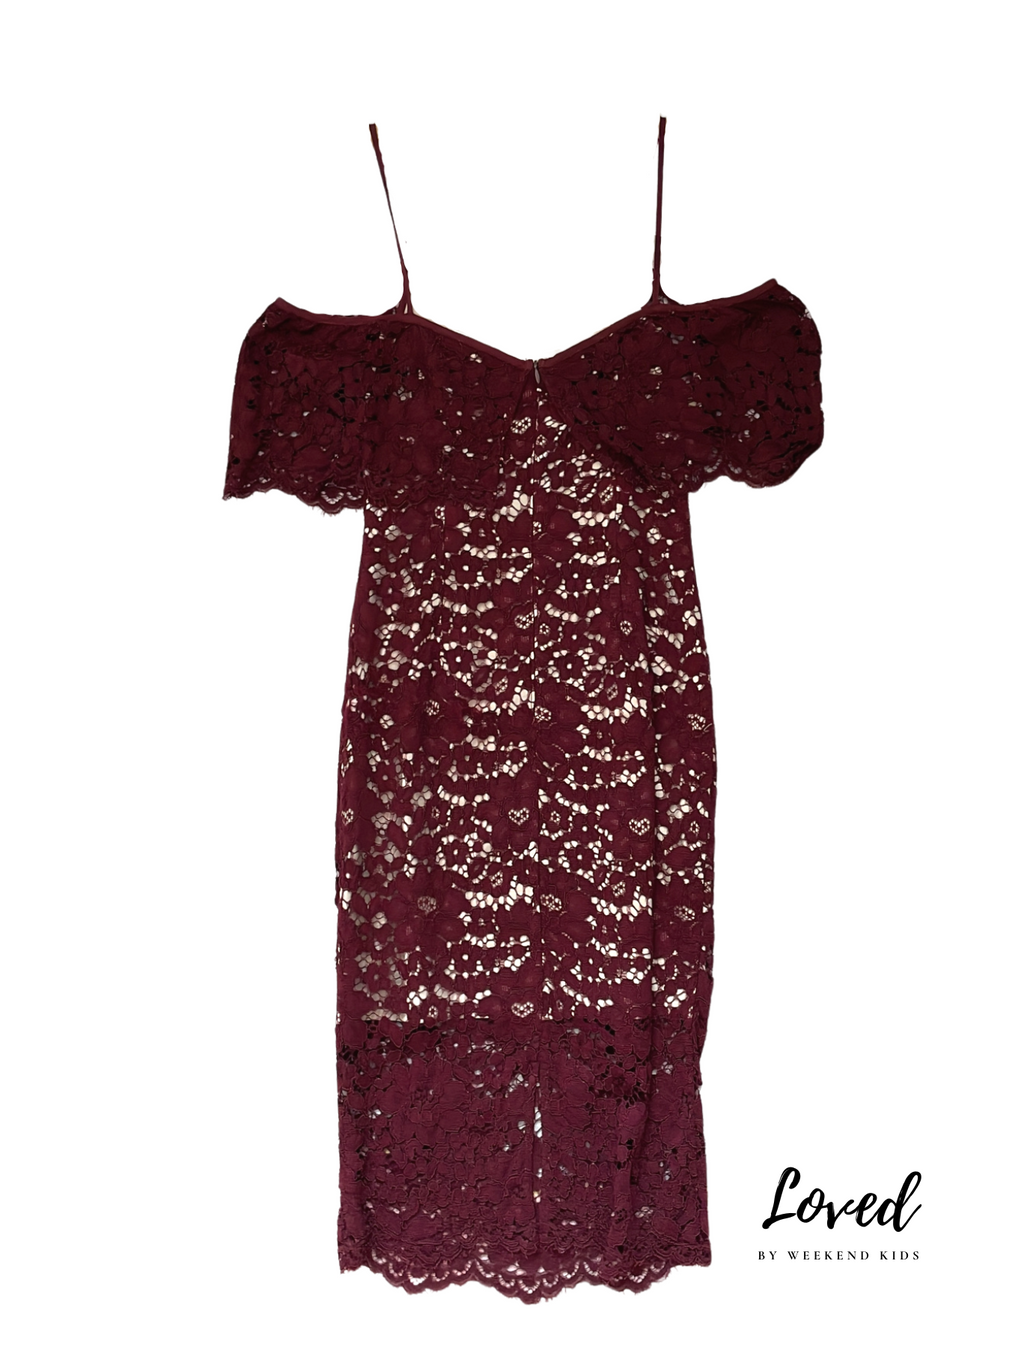 Penelope Lace Dress (Loved)